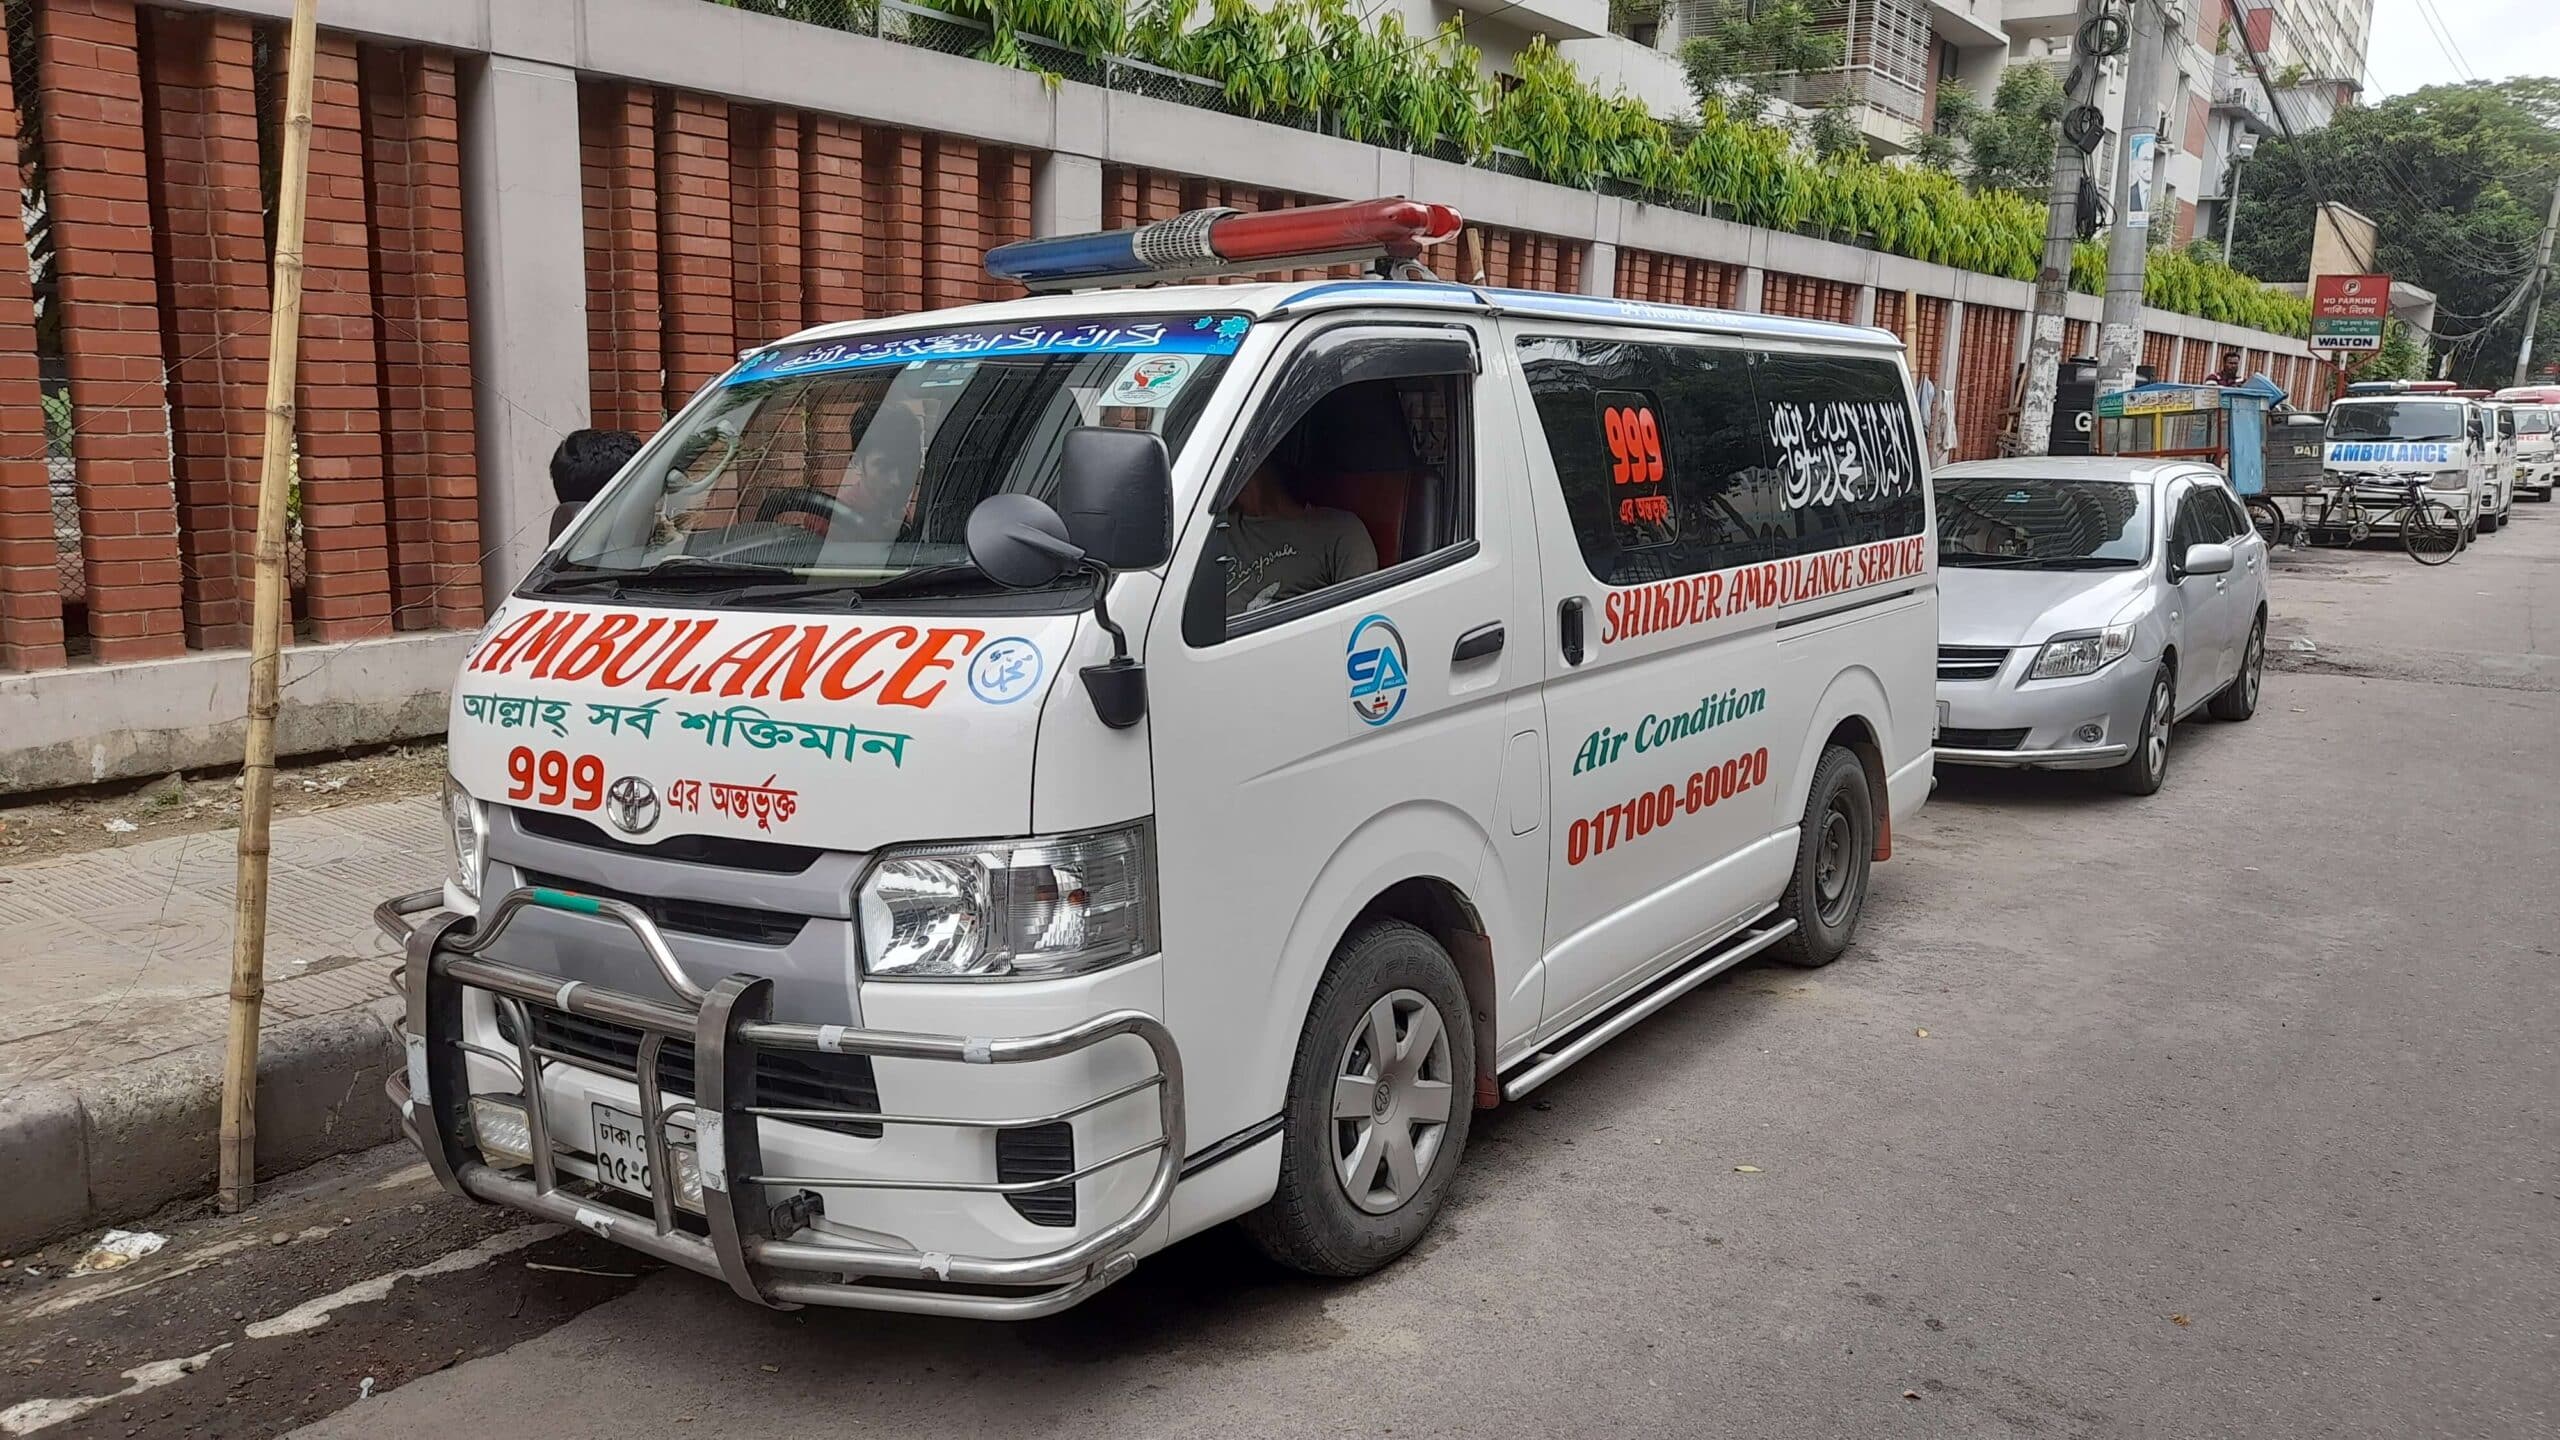 meradia-ambulance-service